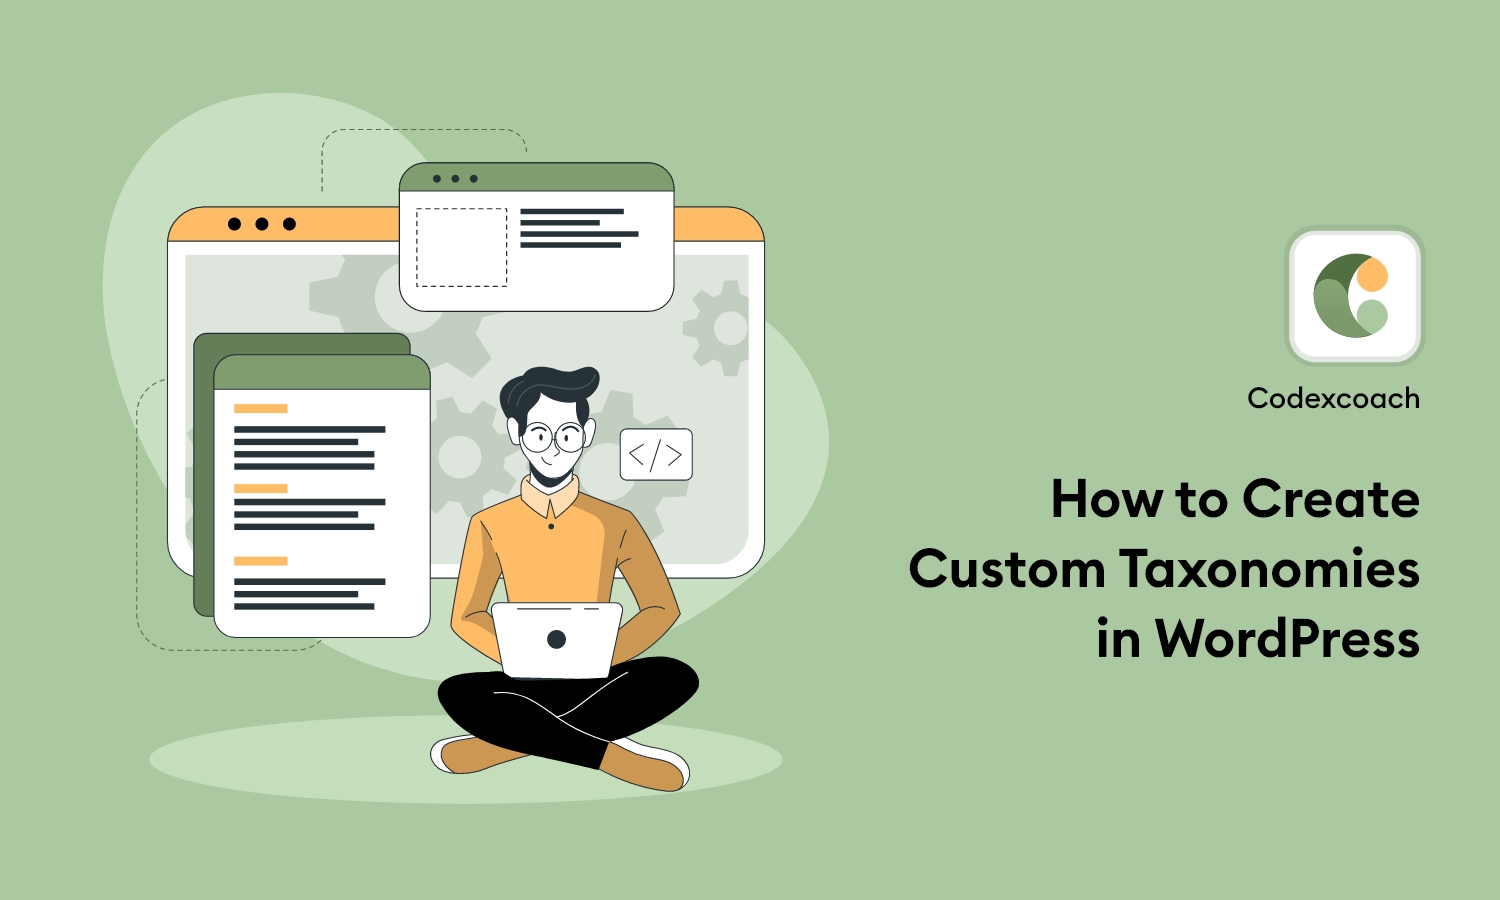 How to Create Custom Taxonomies in WordPress